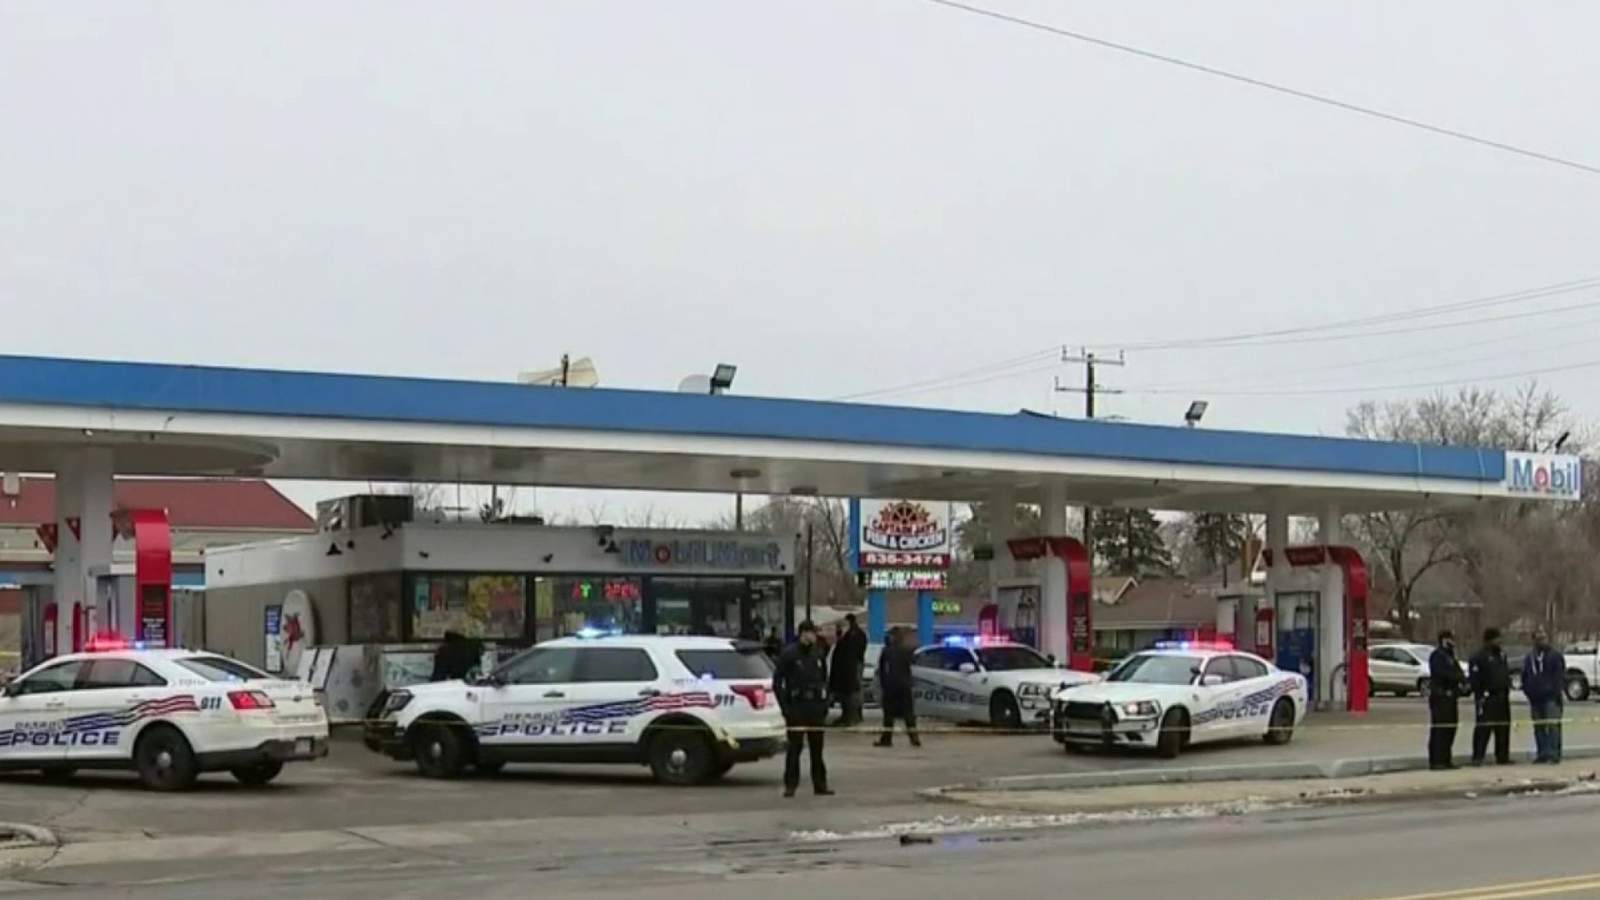 Police: Gunman killed random victim at Detroit gas station before turning gun on himself